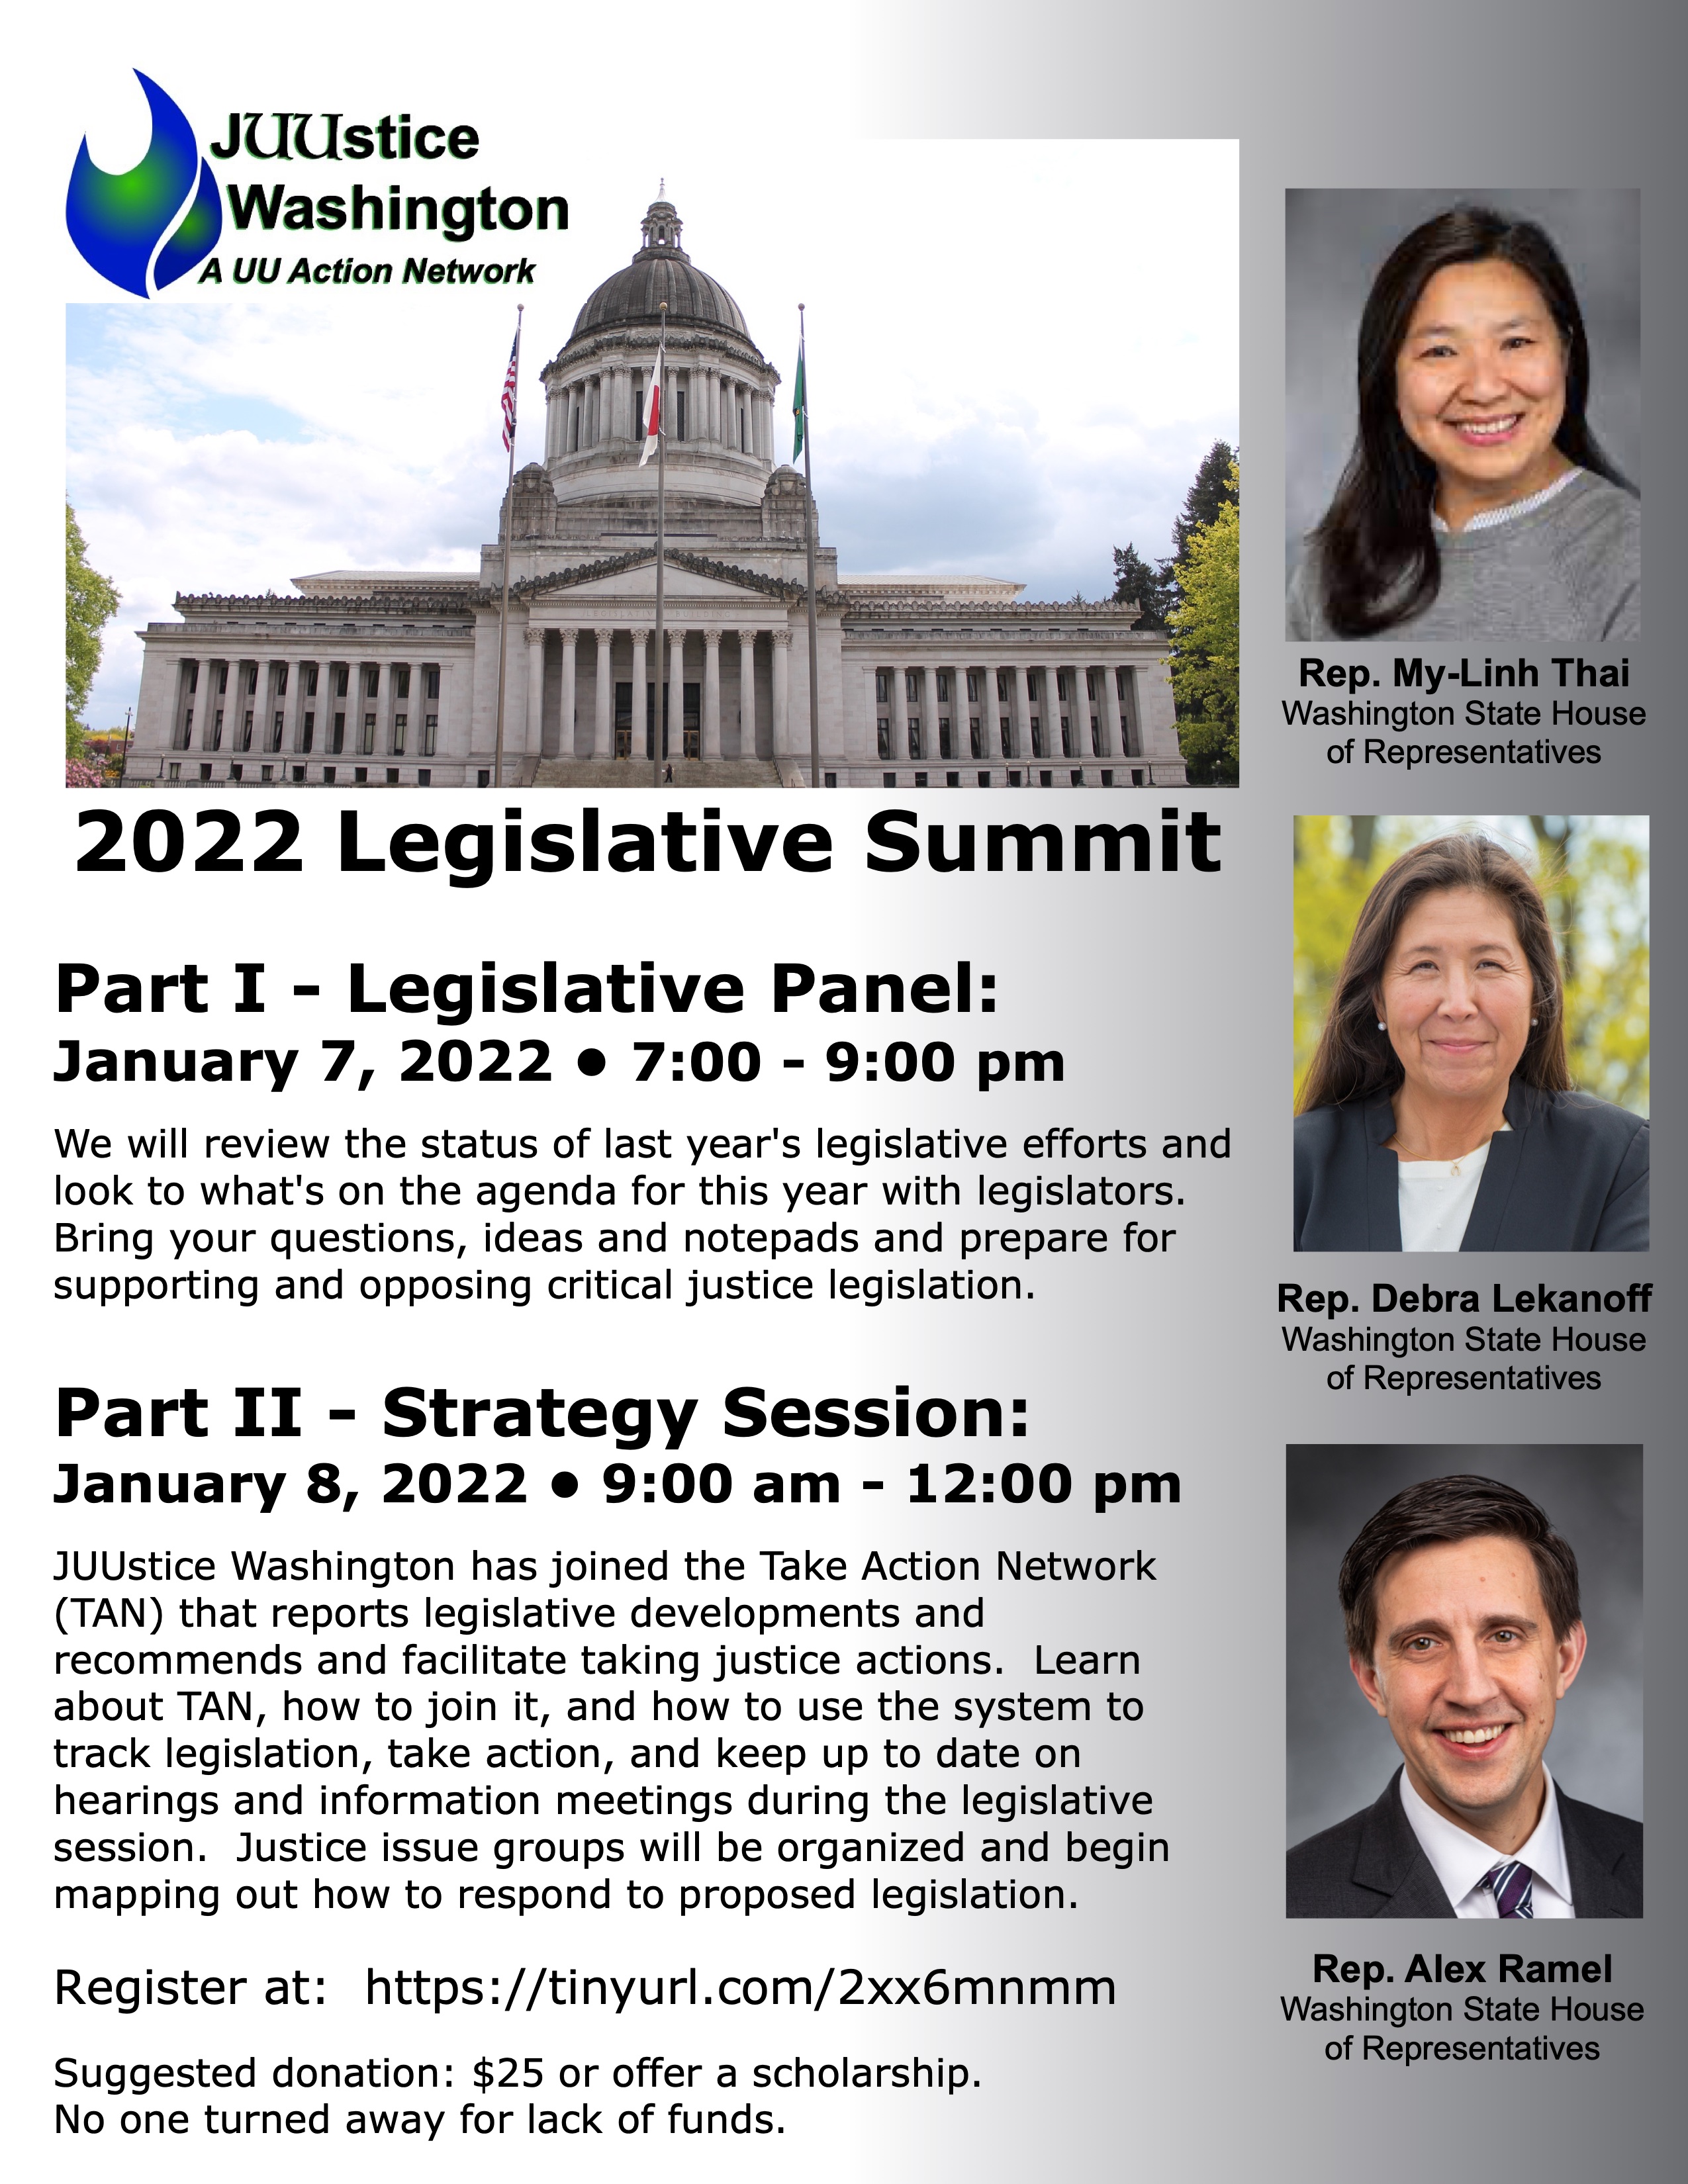 Flyer announcing the 2022 Legislative Summit